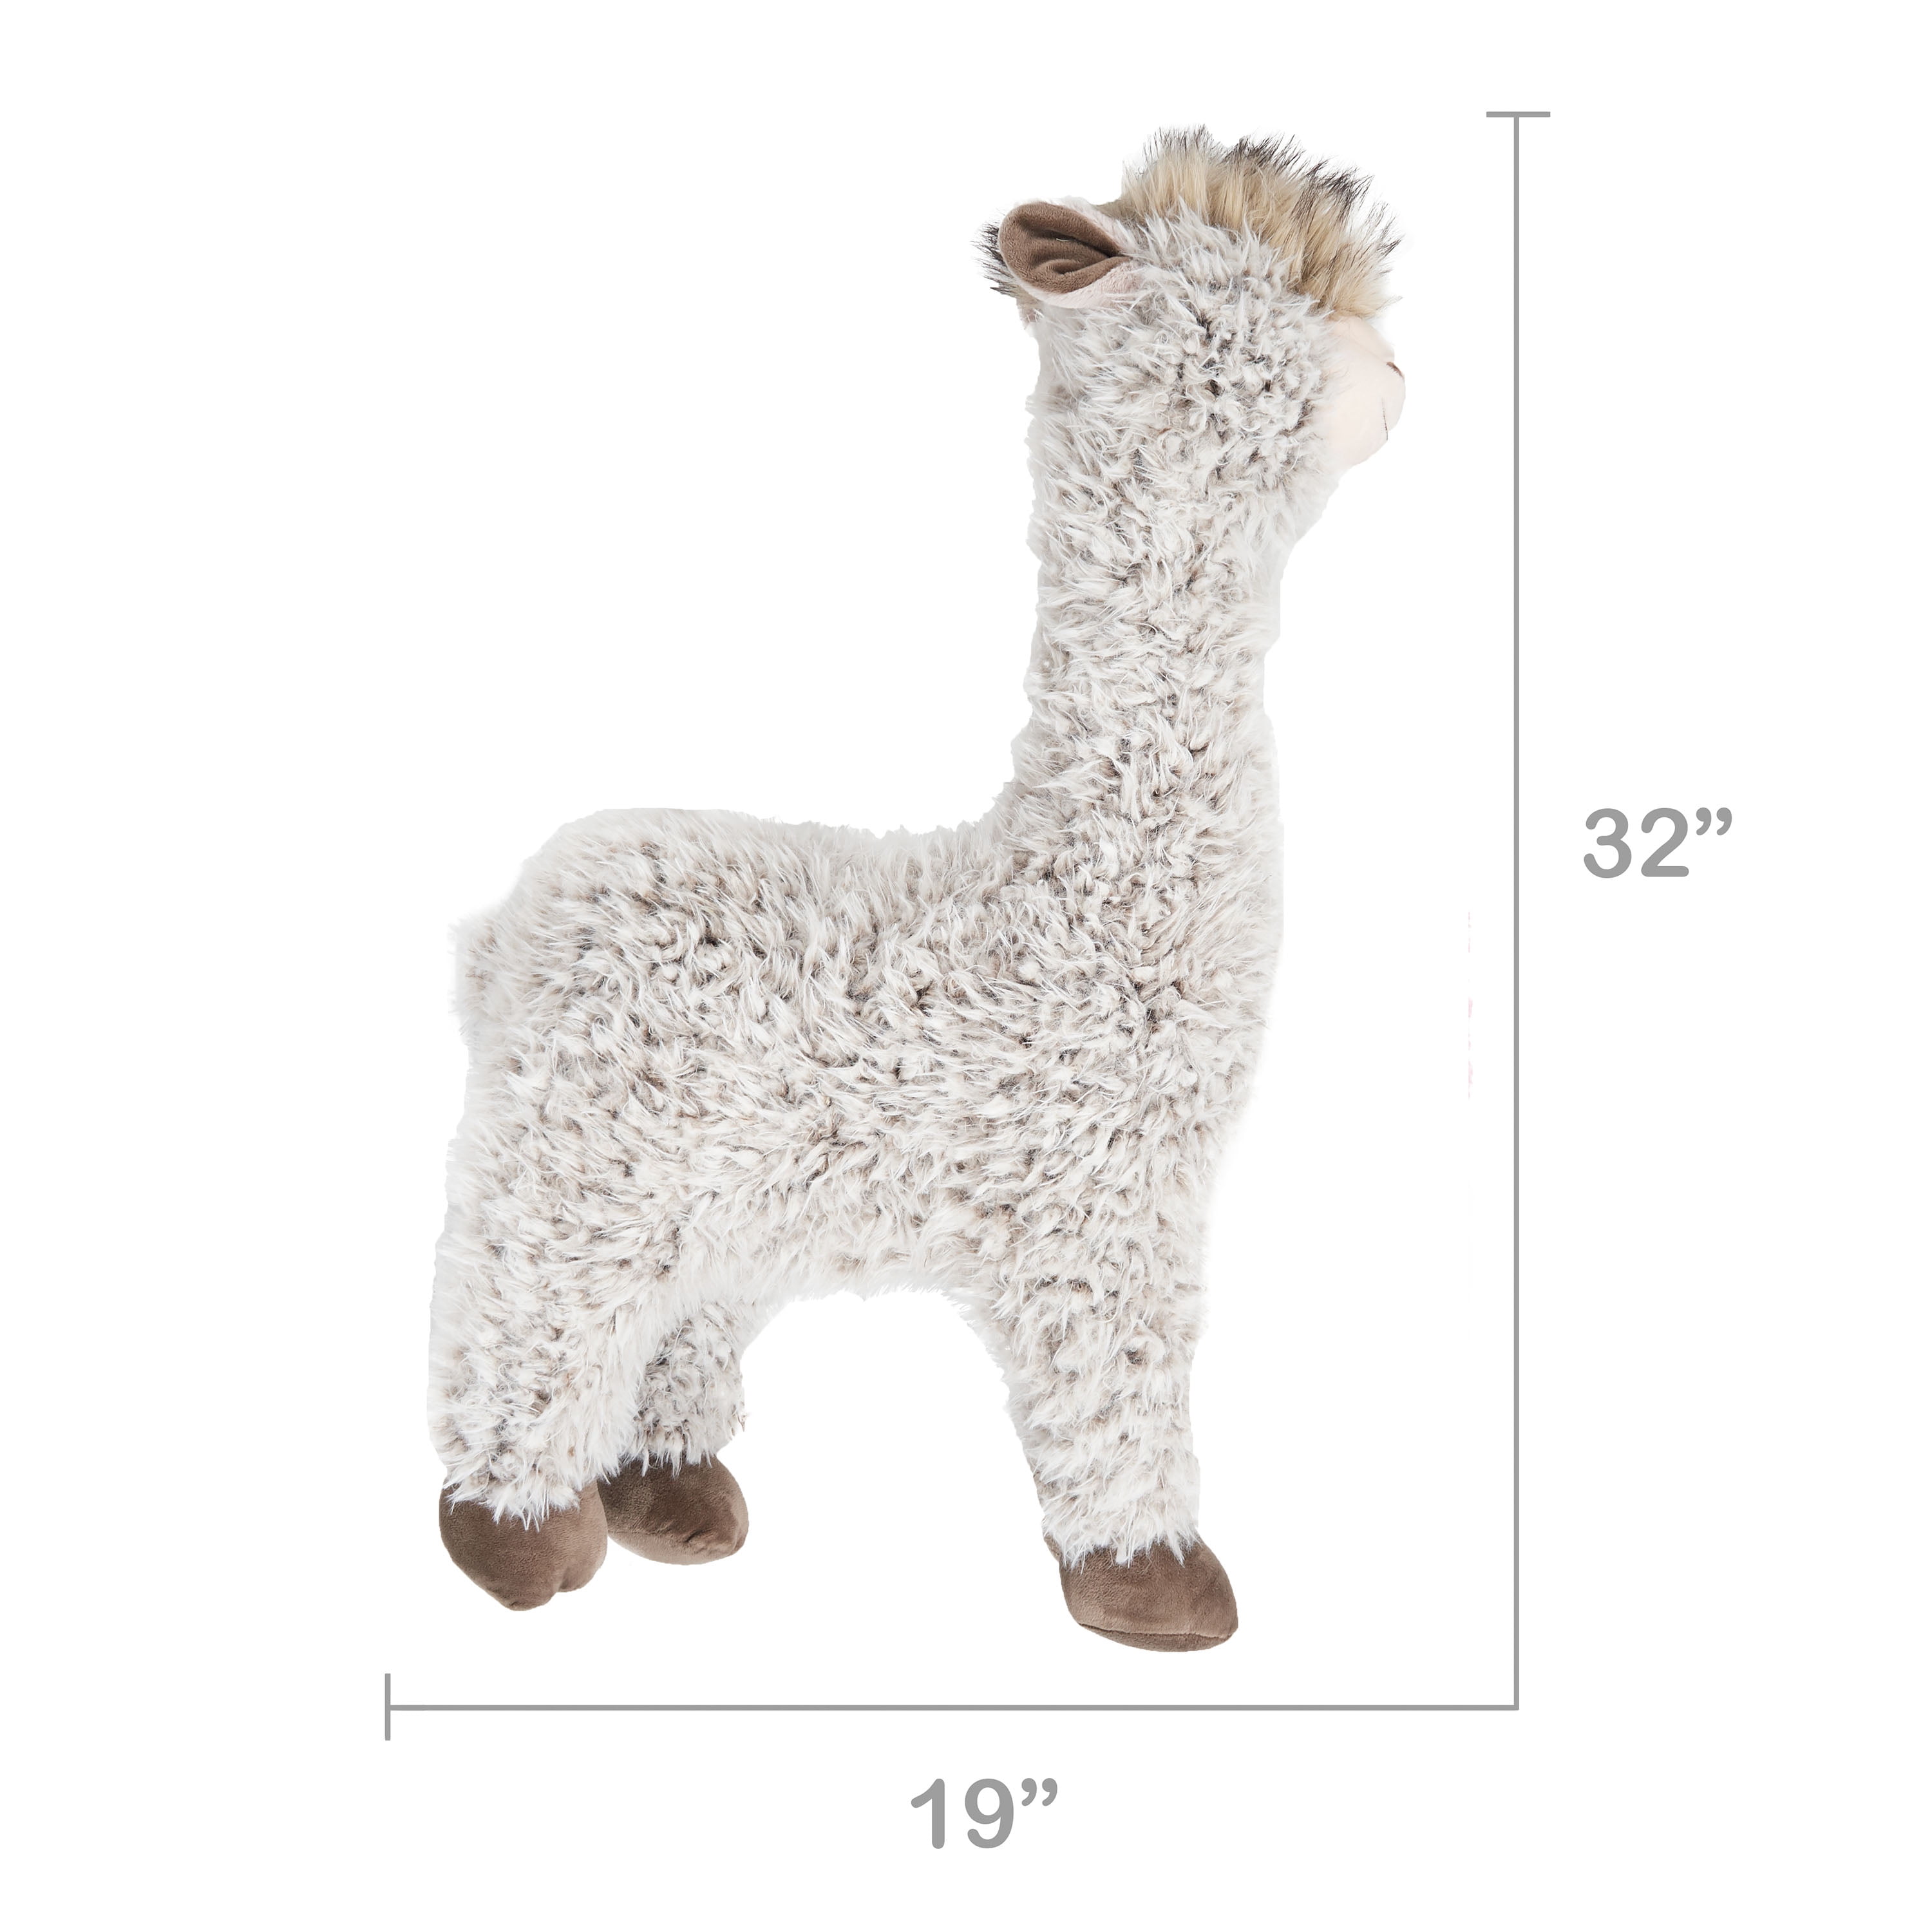 giant stuffed llama walmart